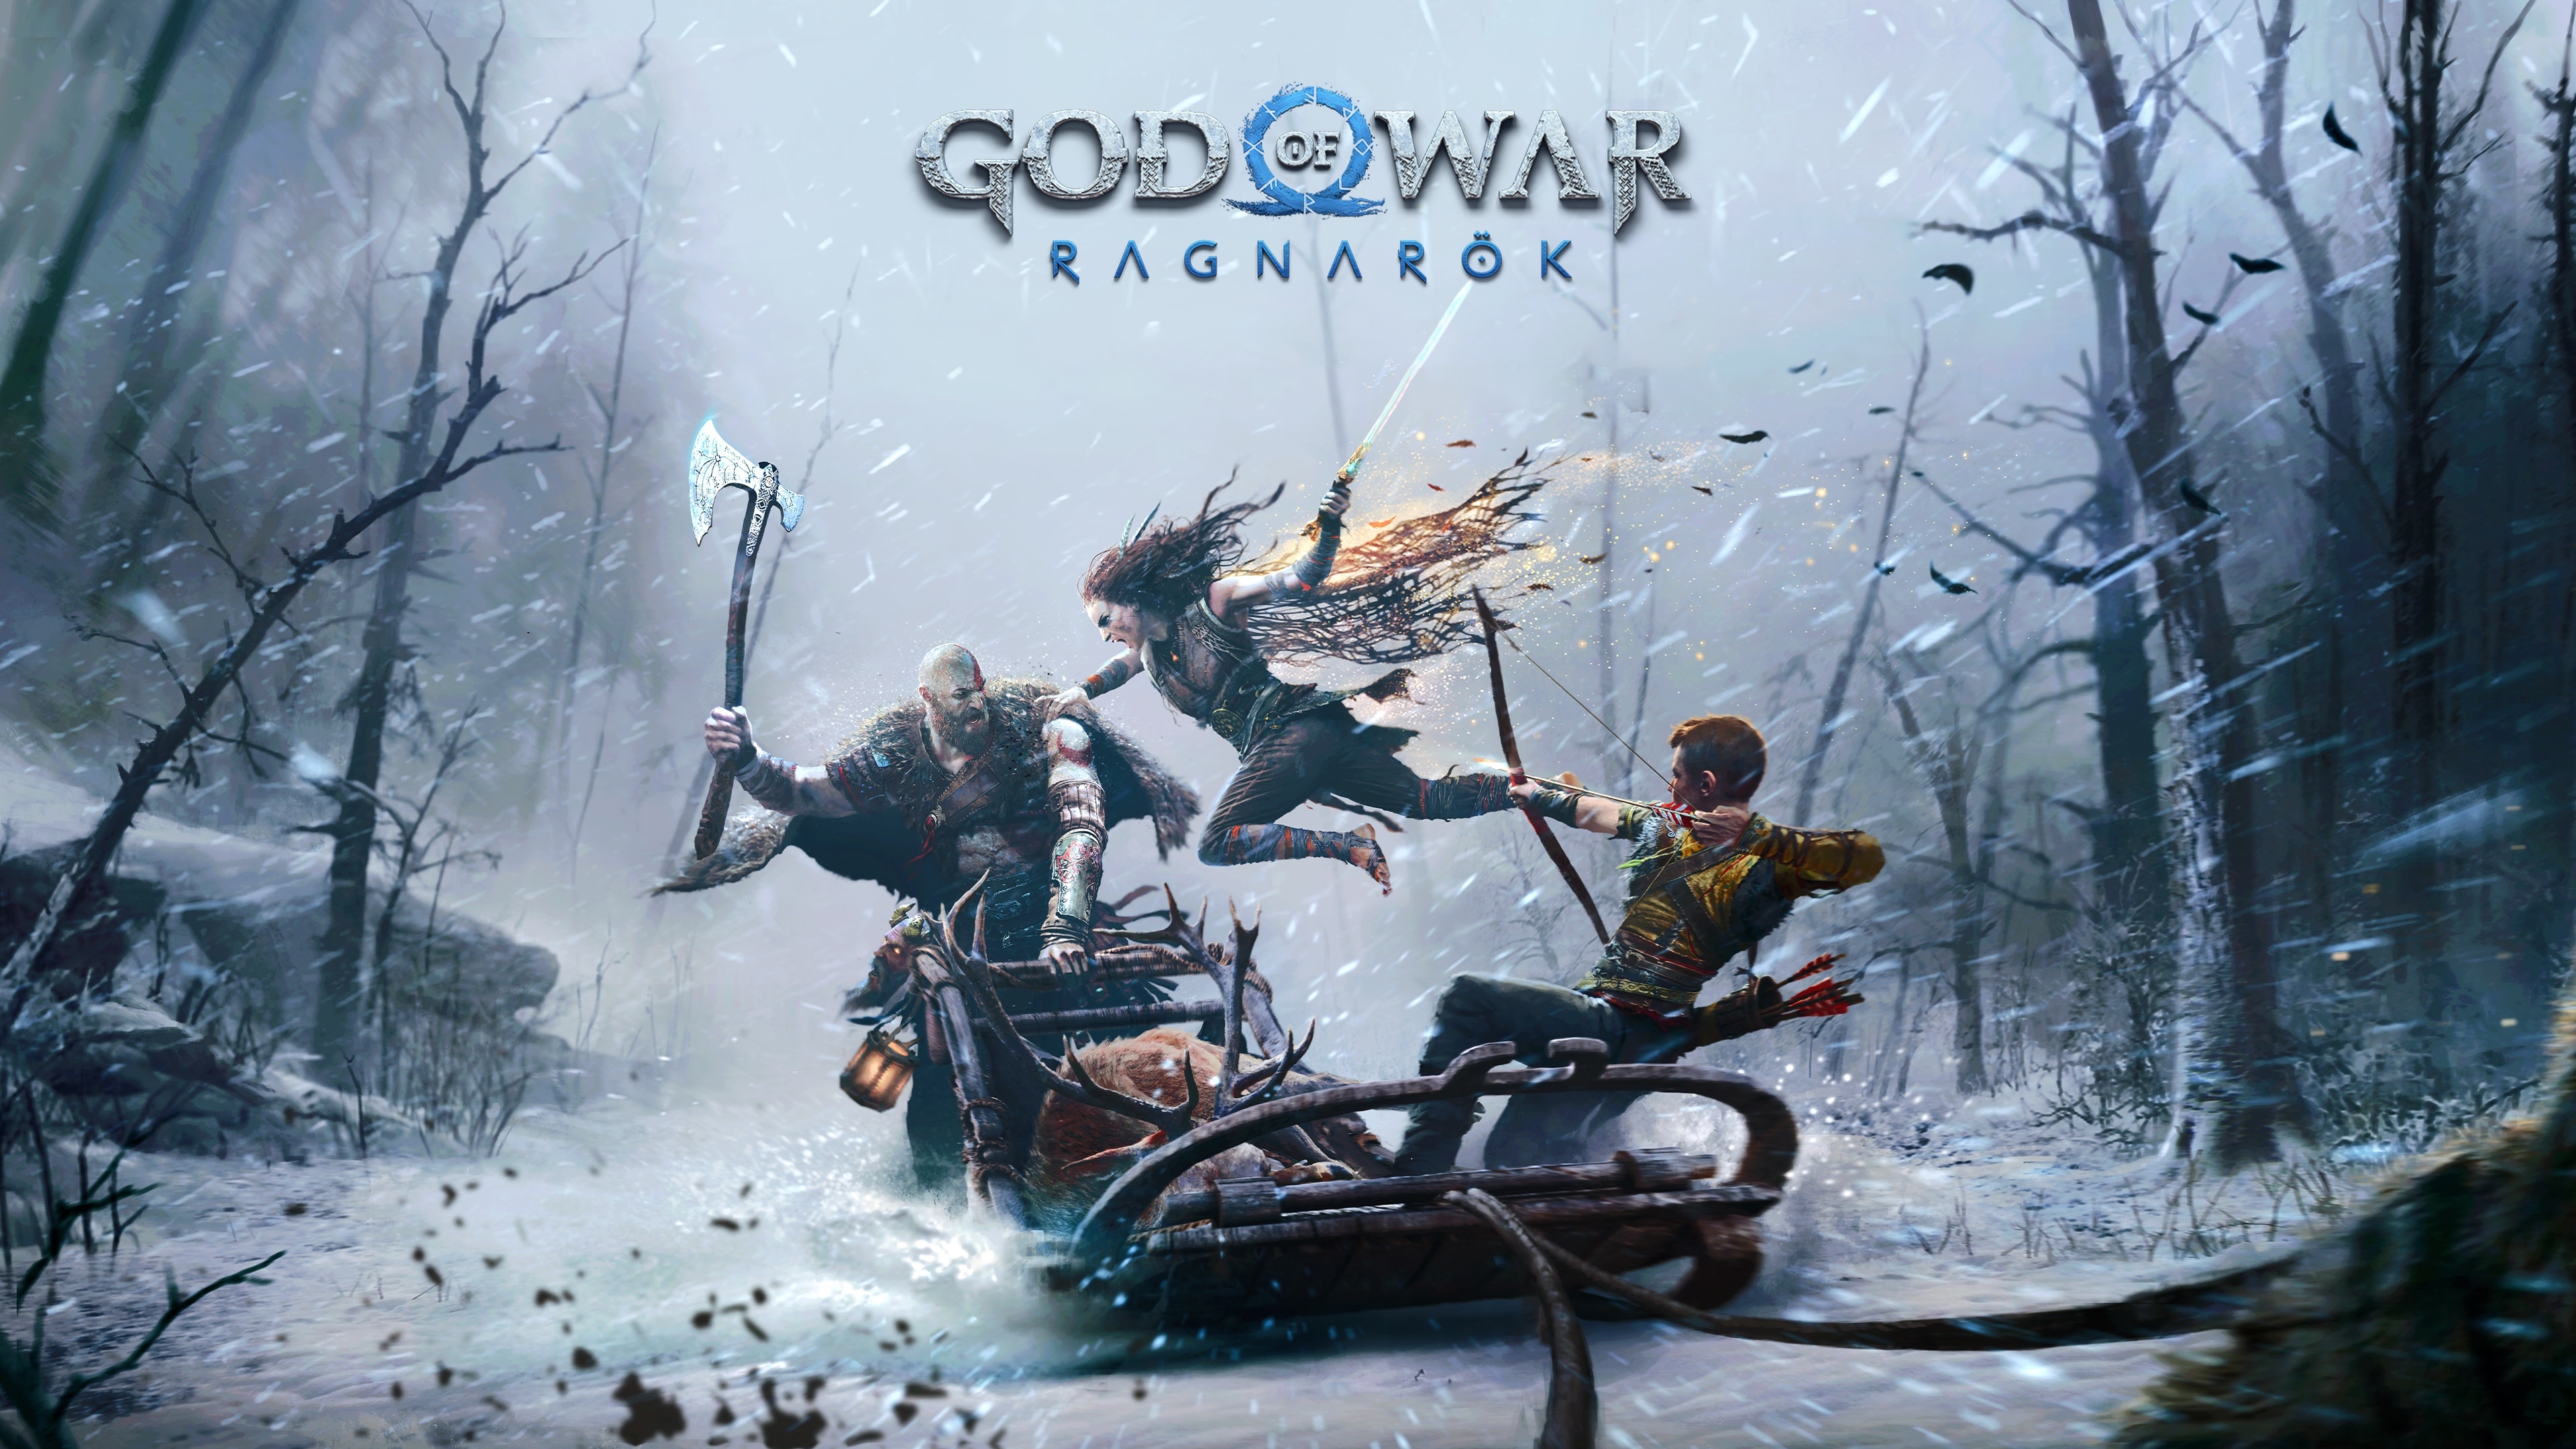 God of War Ragnarök 4k Gaming Poster Wallpaper, HD Games 4K Wallpapers,  Images, Photos and Background - Wallpapers Den